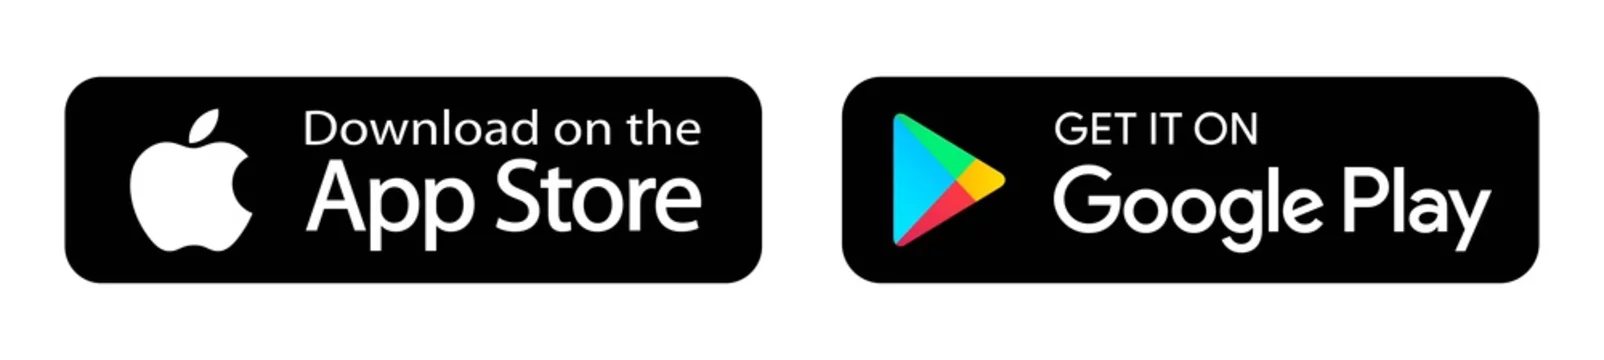 Vetor de App store buttons set. Google Play Store logo.